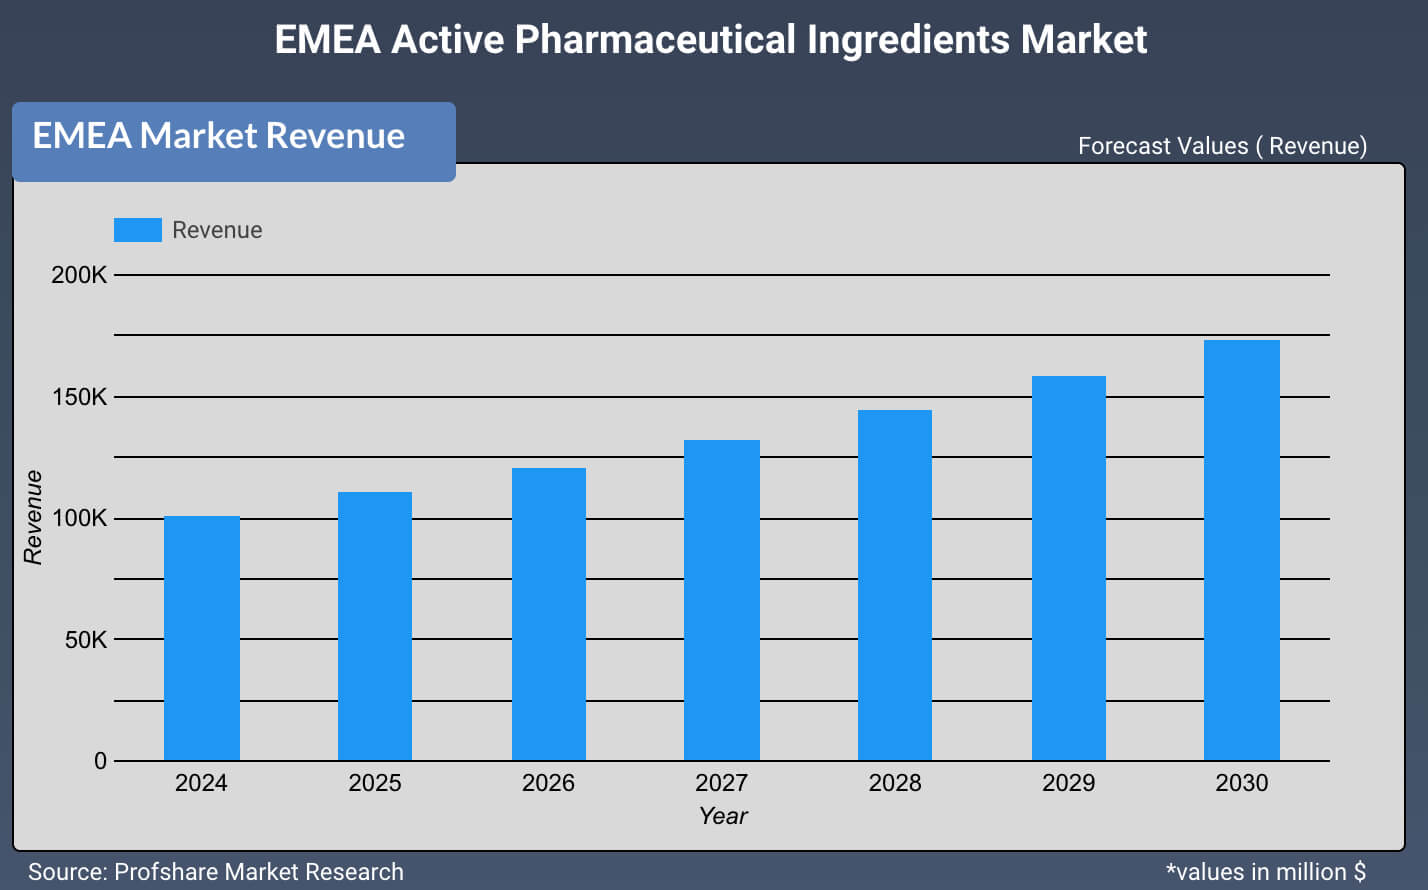 EMEA Active Pharmaceutical Ingredients Market